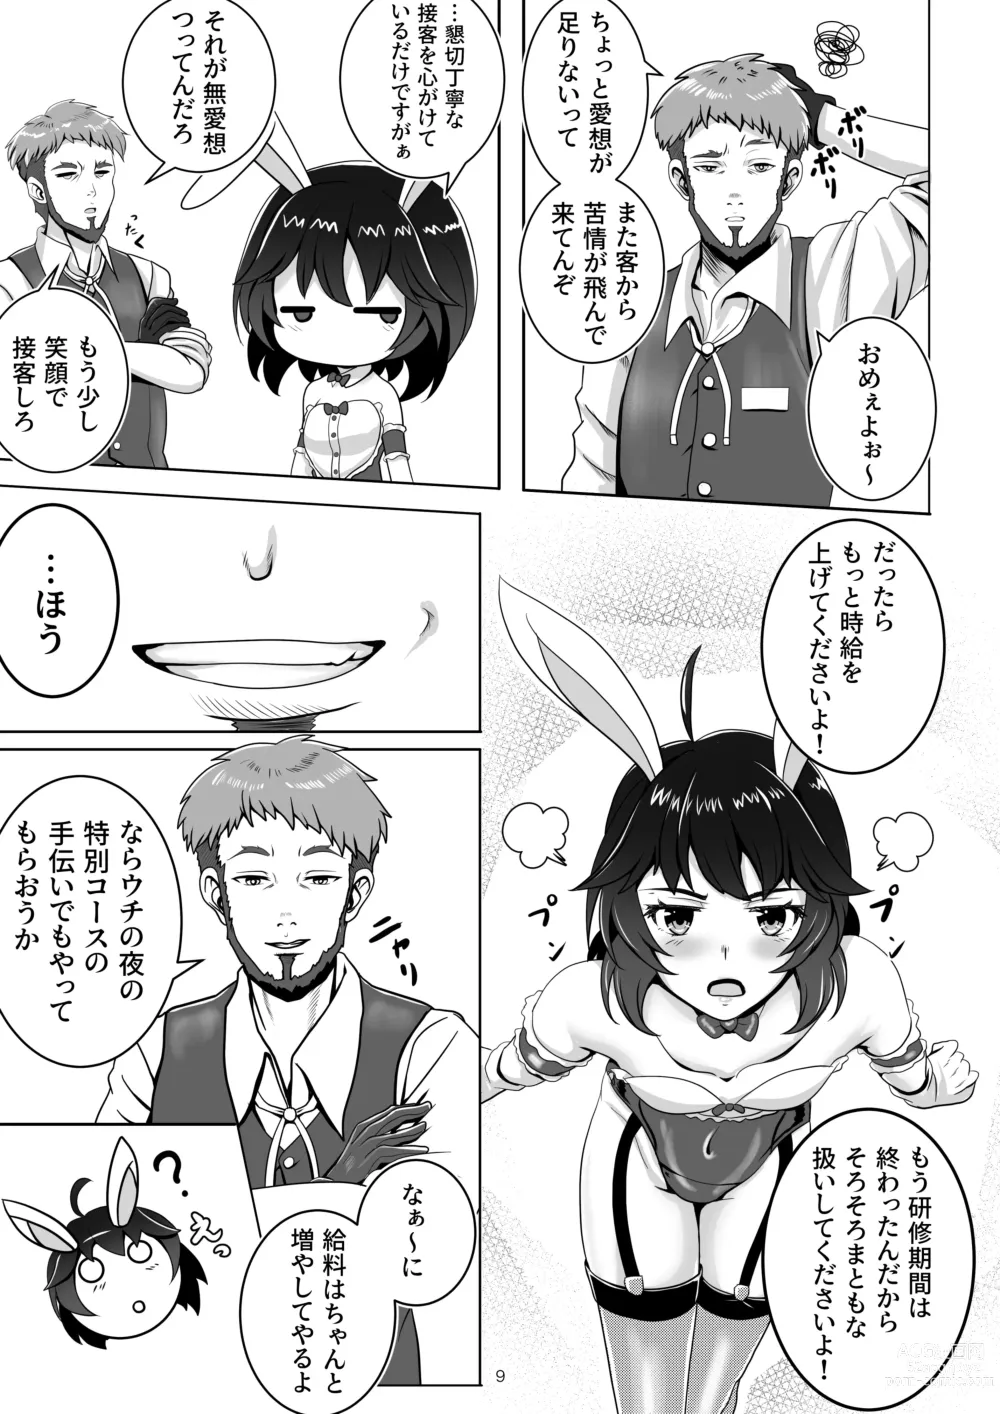 Page 9 of doujinshi Bunny x Baito Party